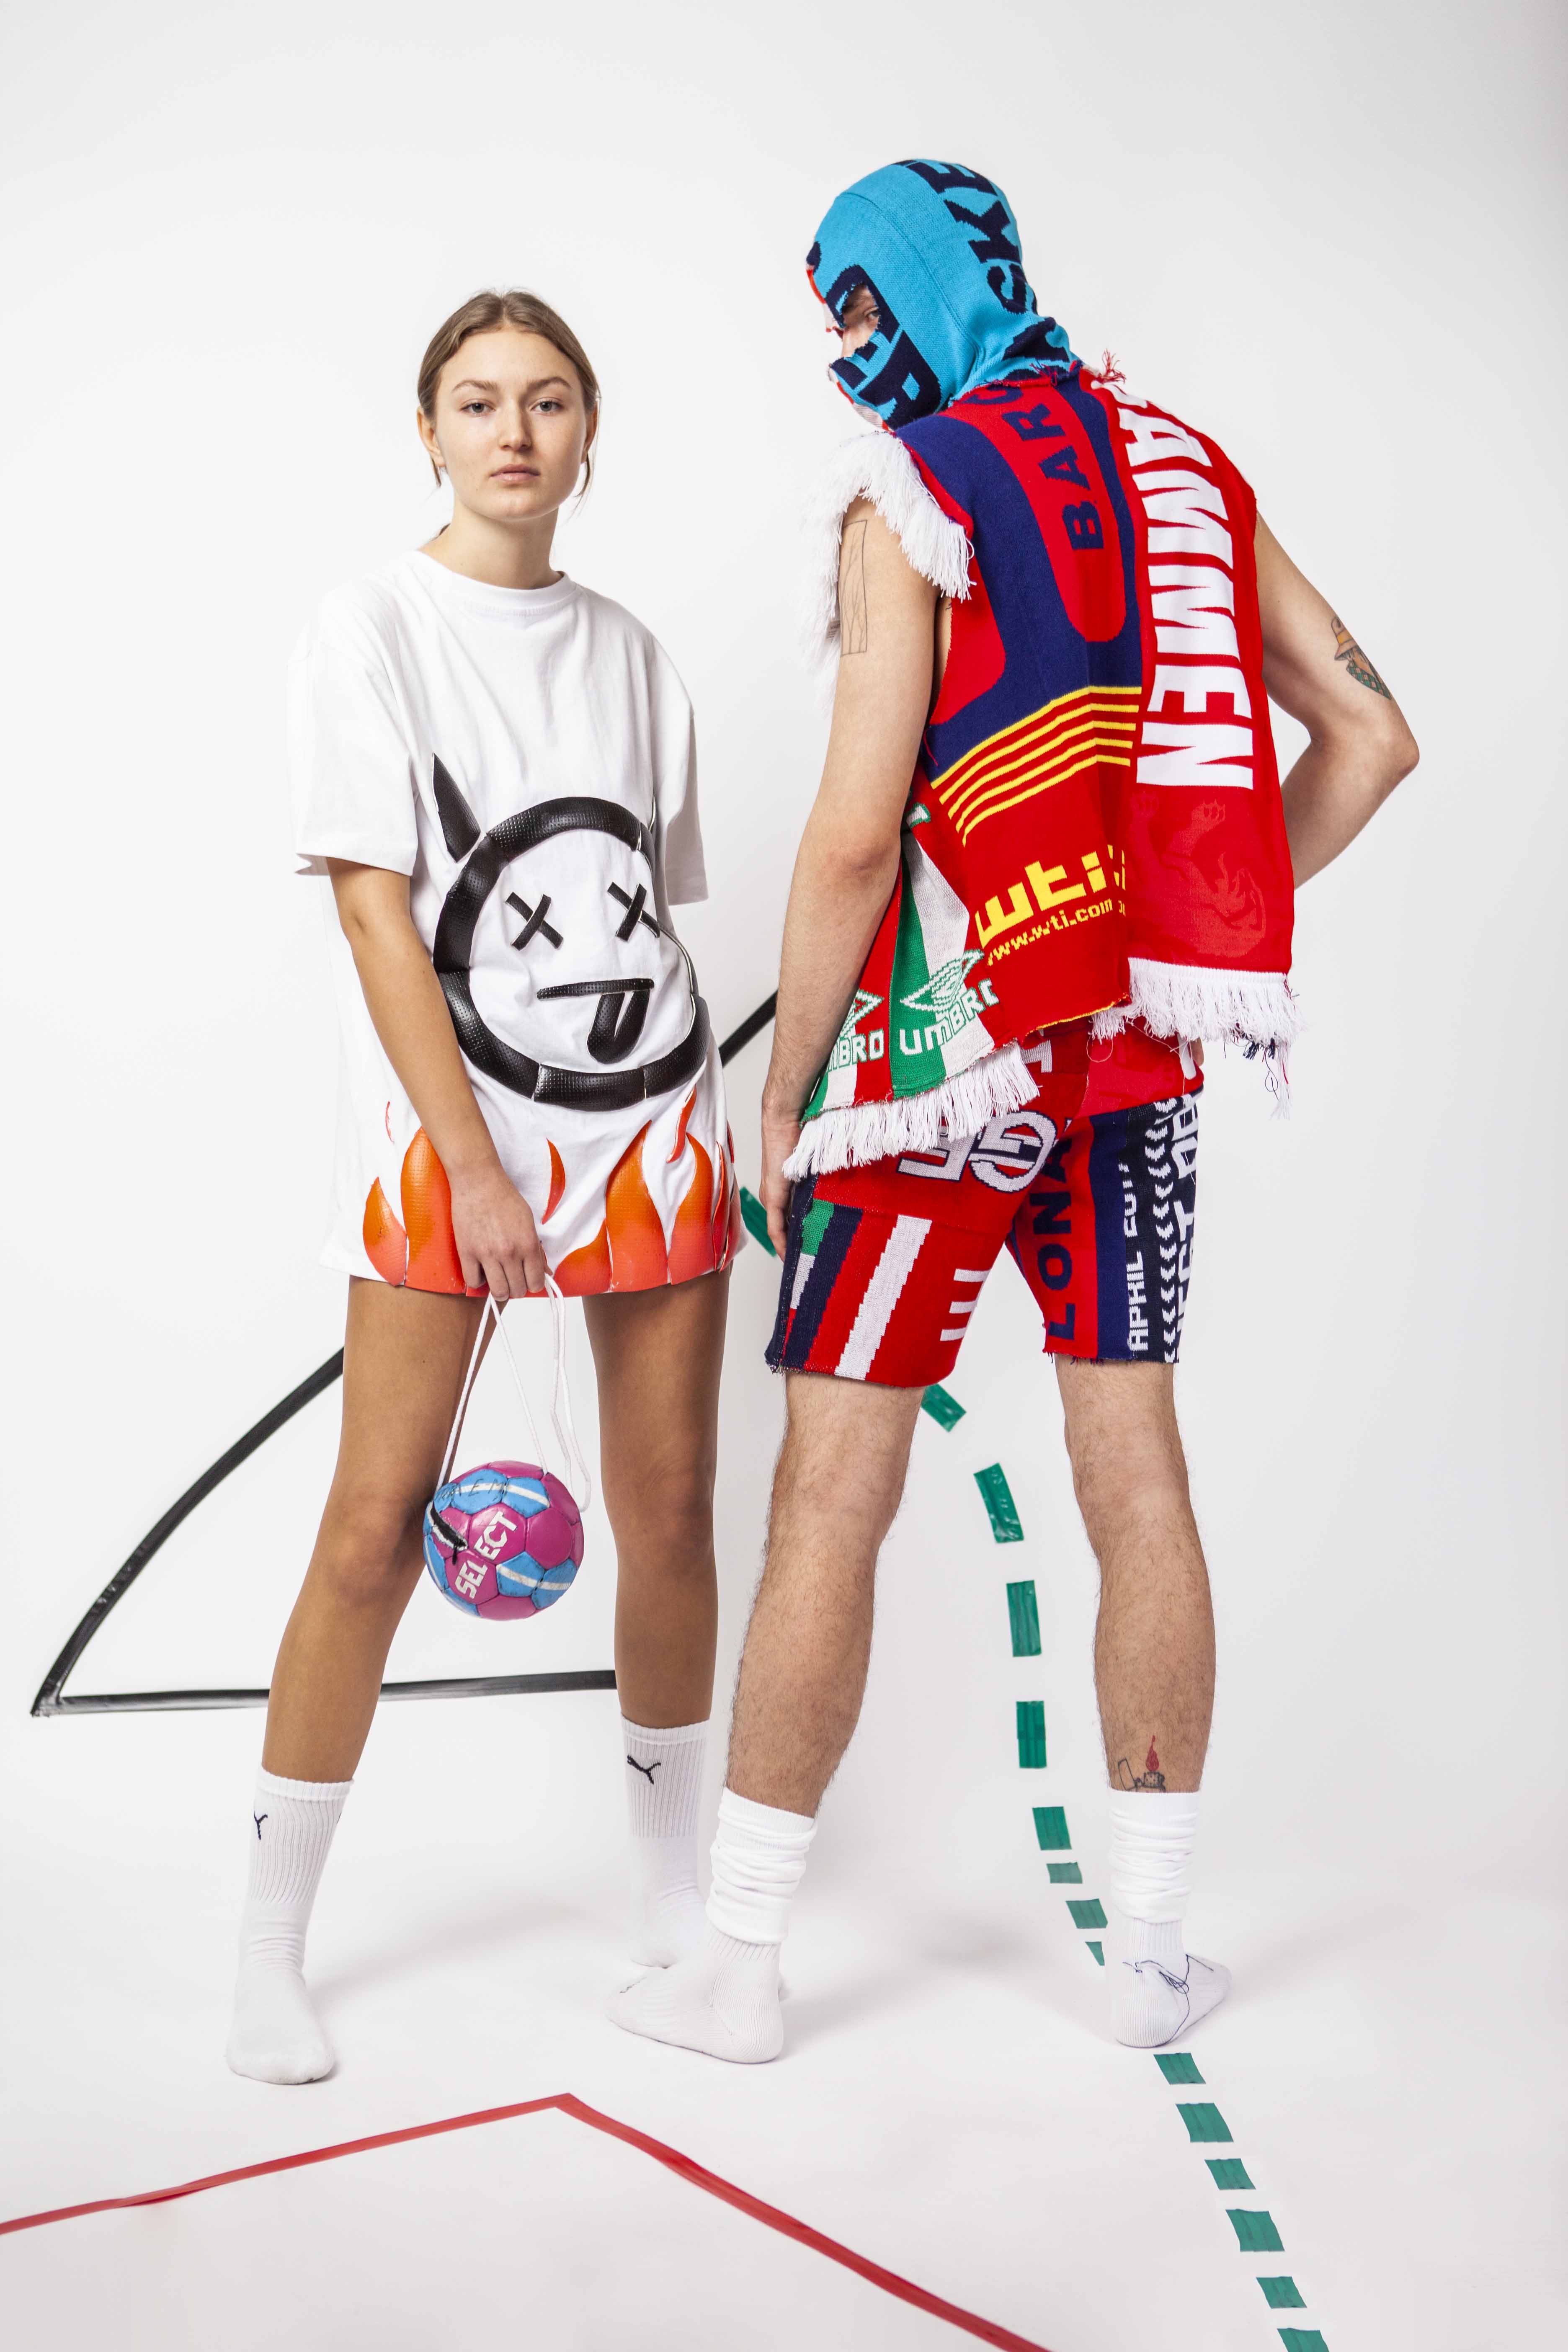 Fotoshoot SoFI bilde av to studenter som poserer i sportsklær